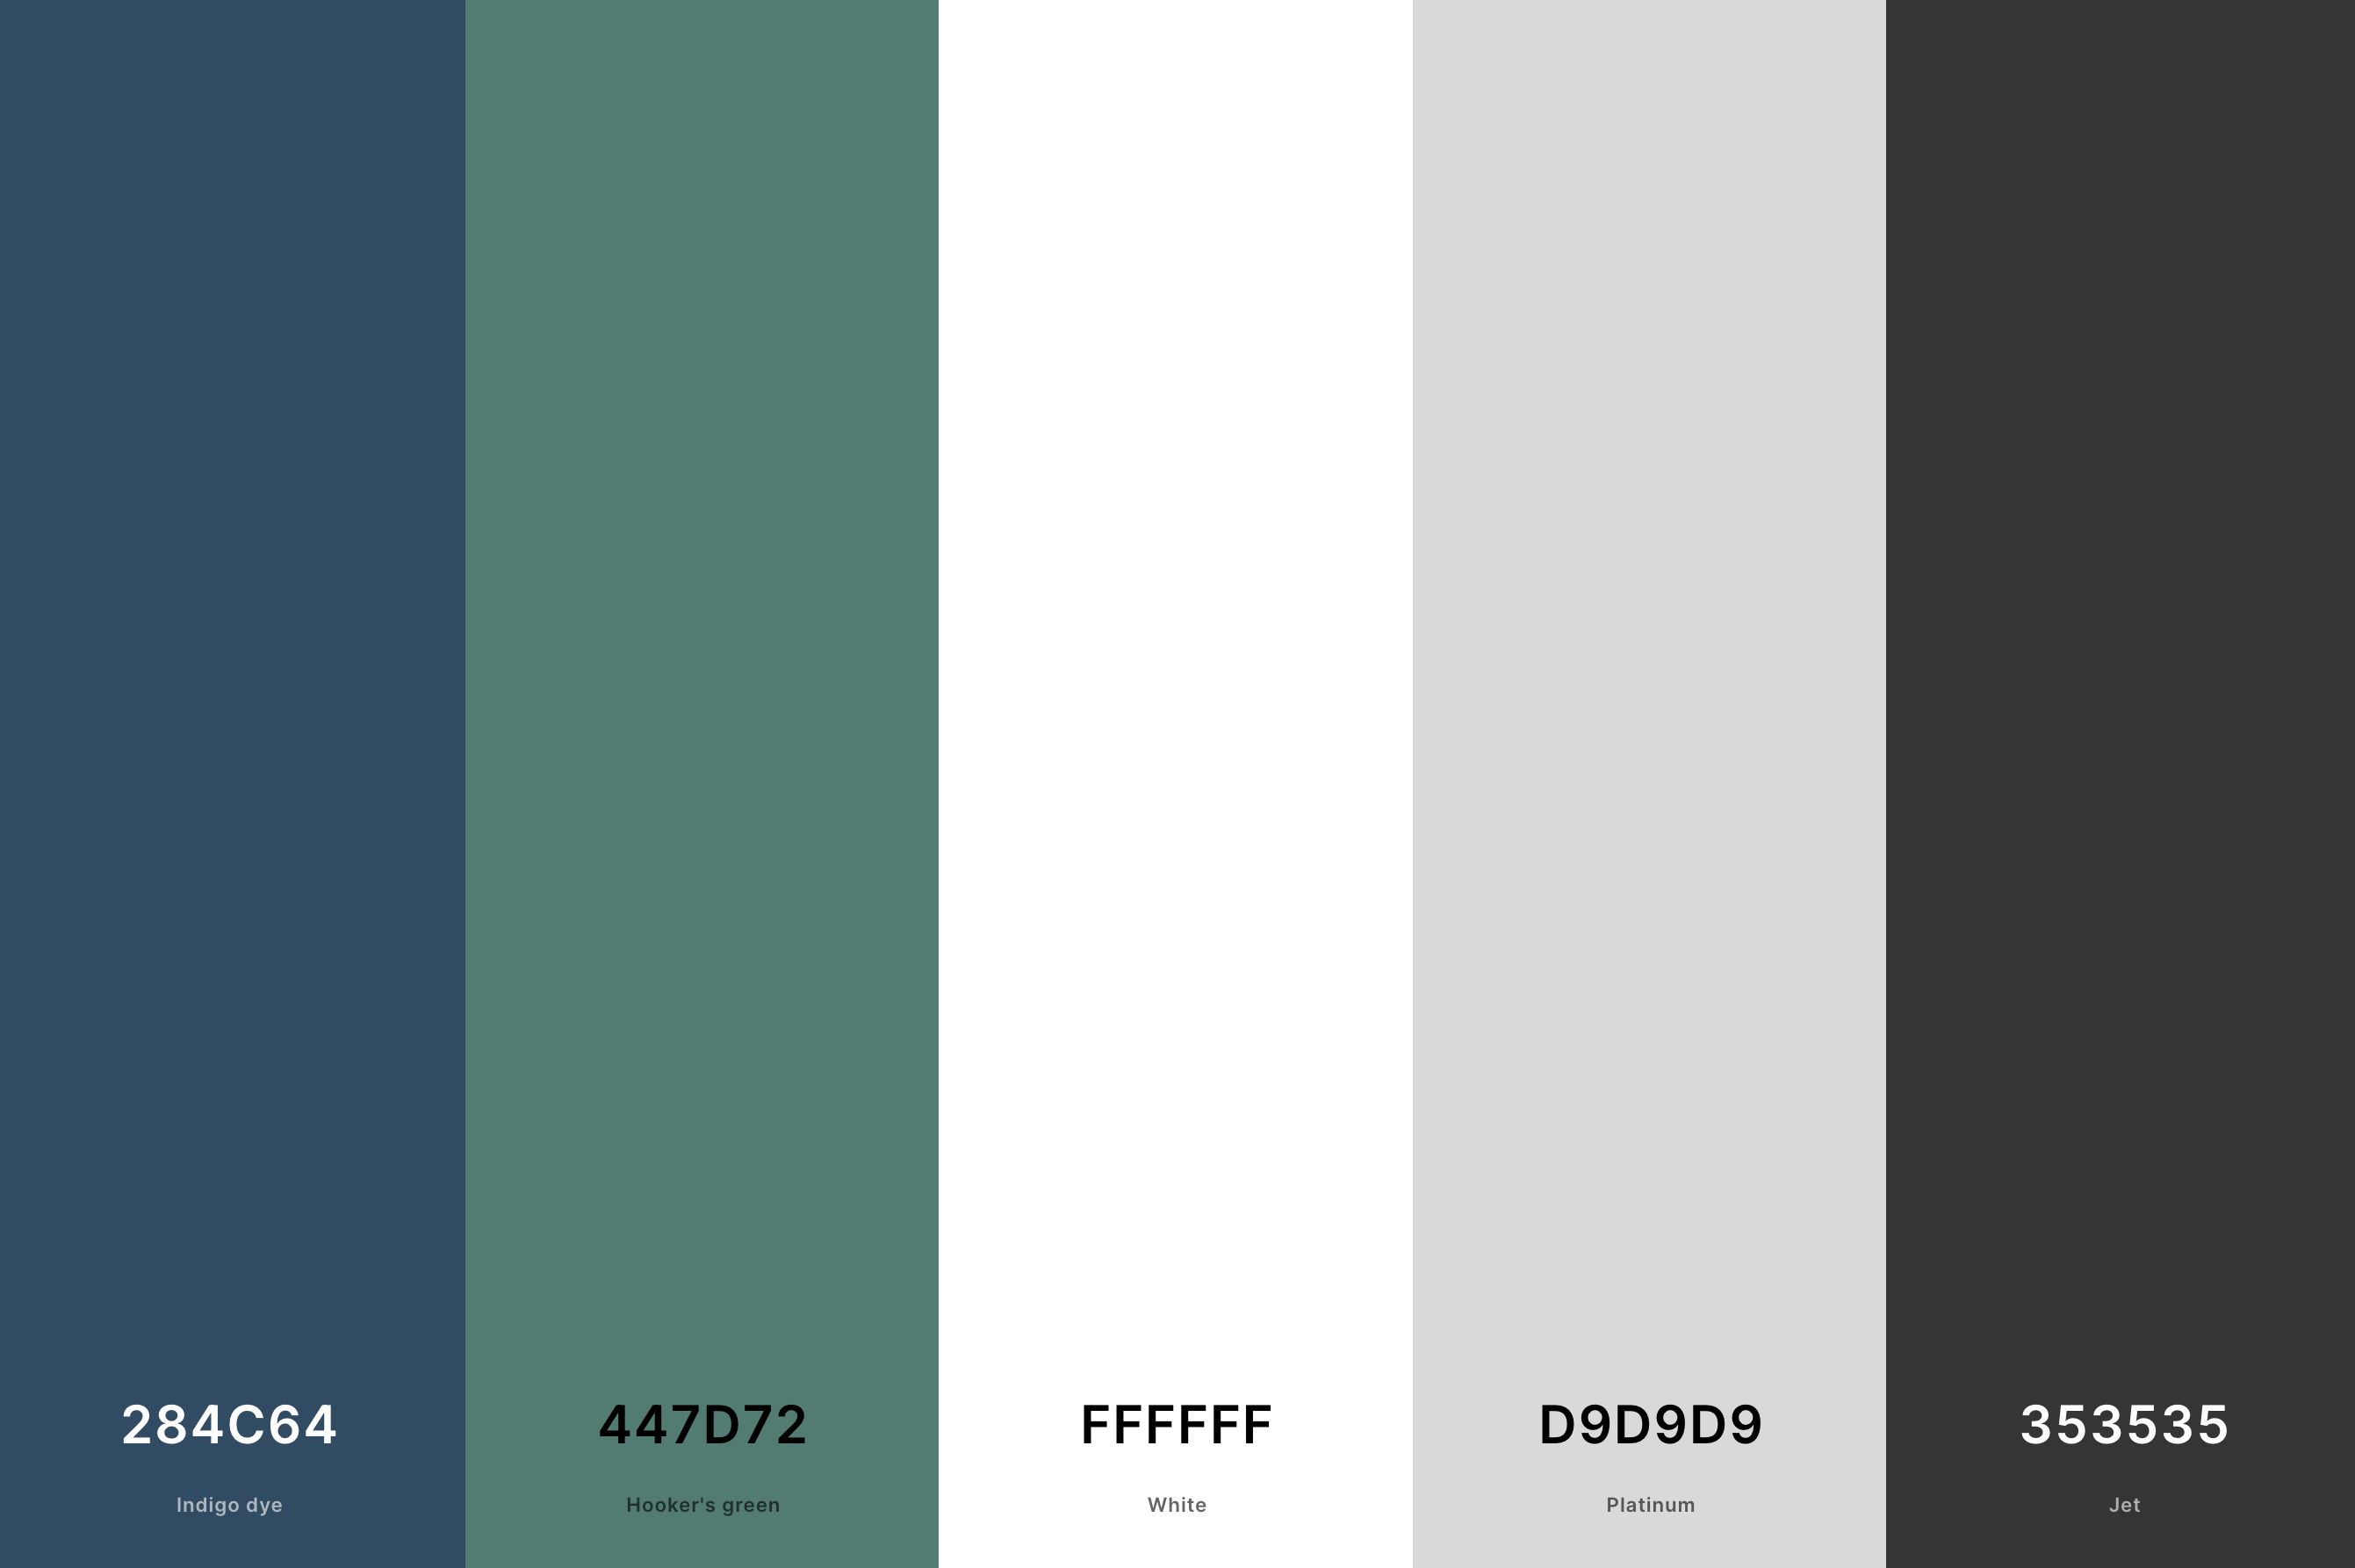 24. Blue, Green And Gray Color Palette Color Palette with Indigo Dye (Hex #284C64) + Hooker'S Green (Hex #447D72) + White (Hex #FFFFFF) + Platinum (Hex #D9D9D9) + Jet (Hex #353535) Color Palette with Hex Codes